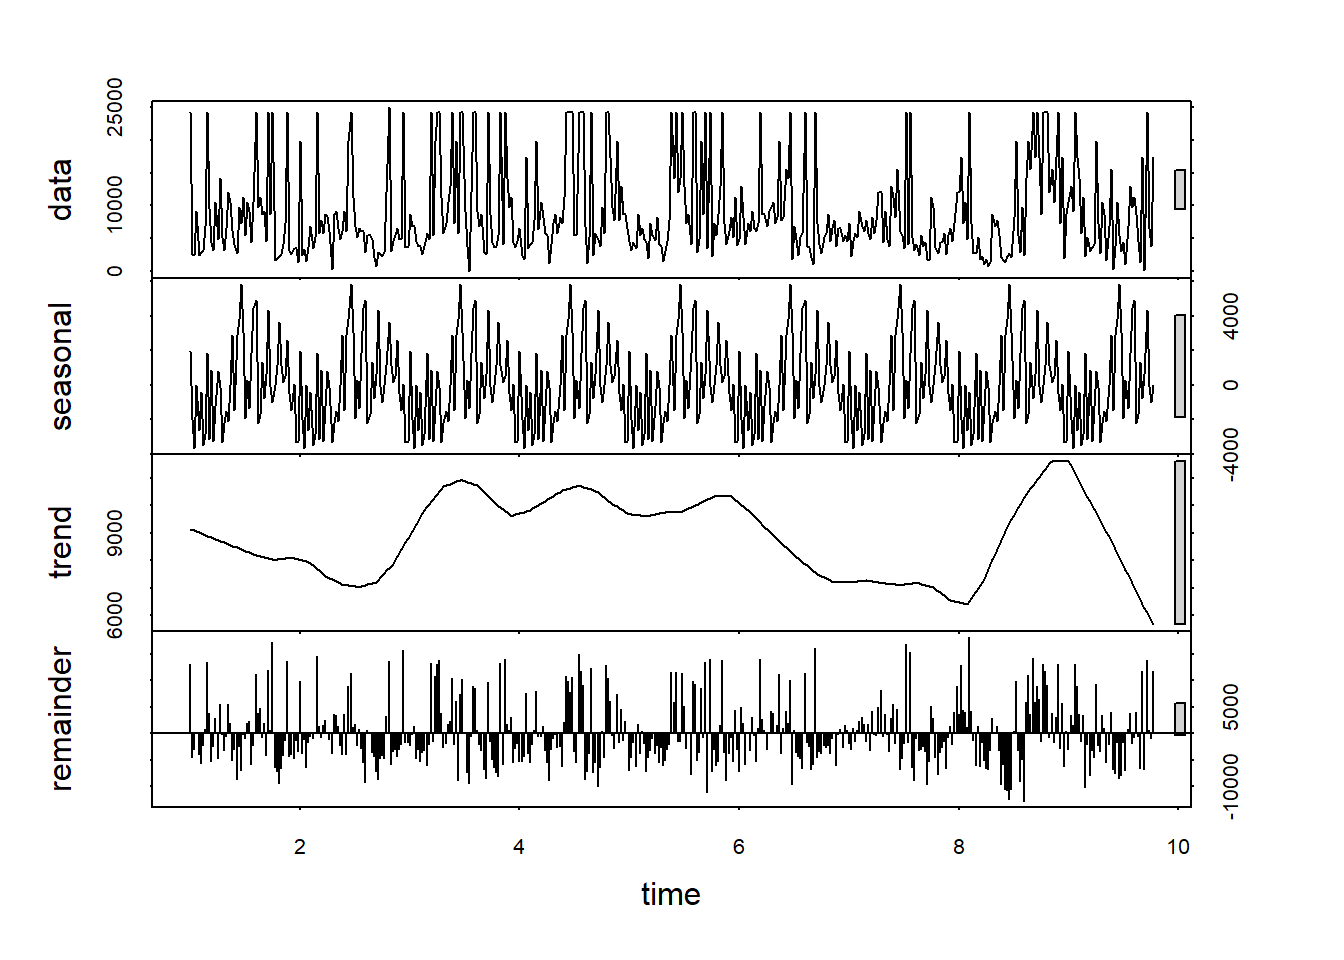 stl of E. coli data, with noisy annual signal